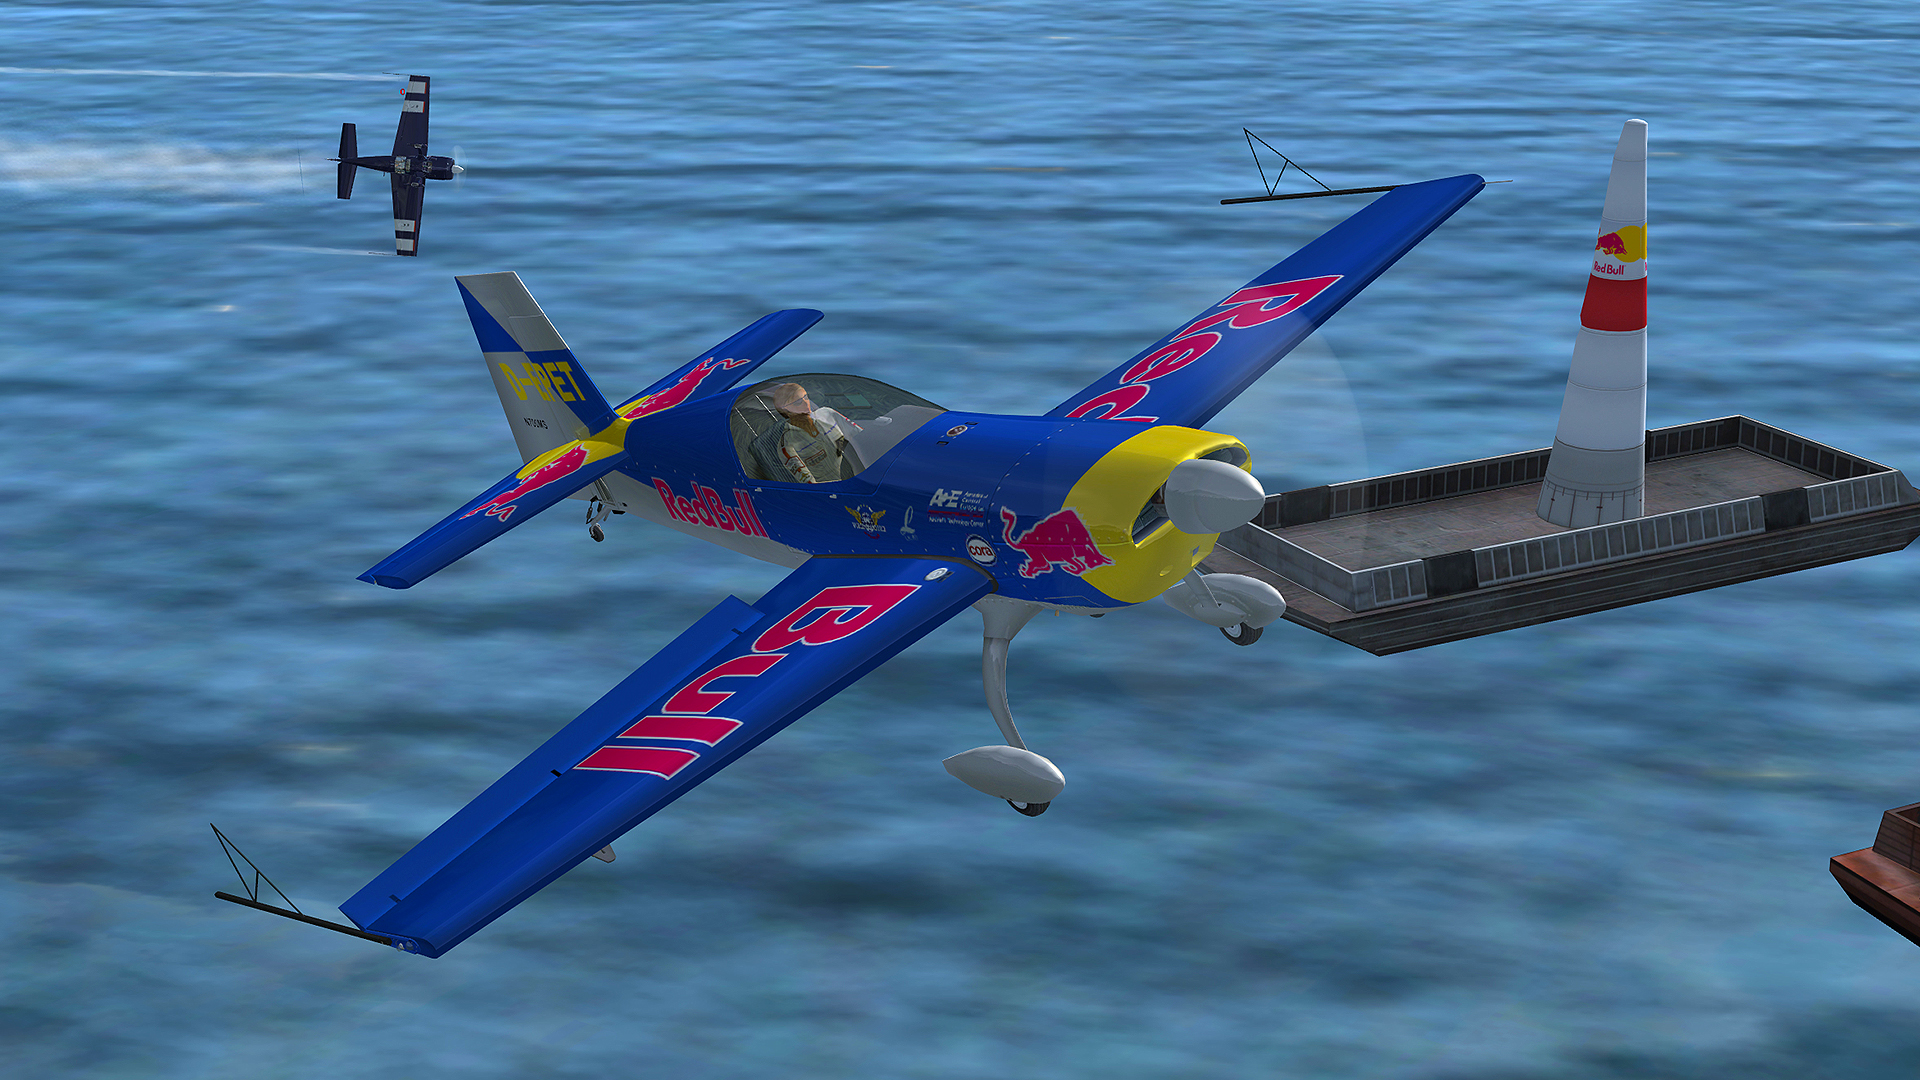 微软模拟飞行10 Steam版/Microsoft Flight Simulator X: Steam Edition配图9